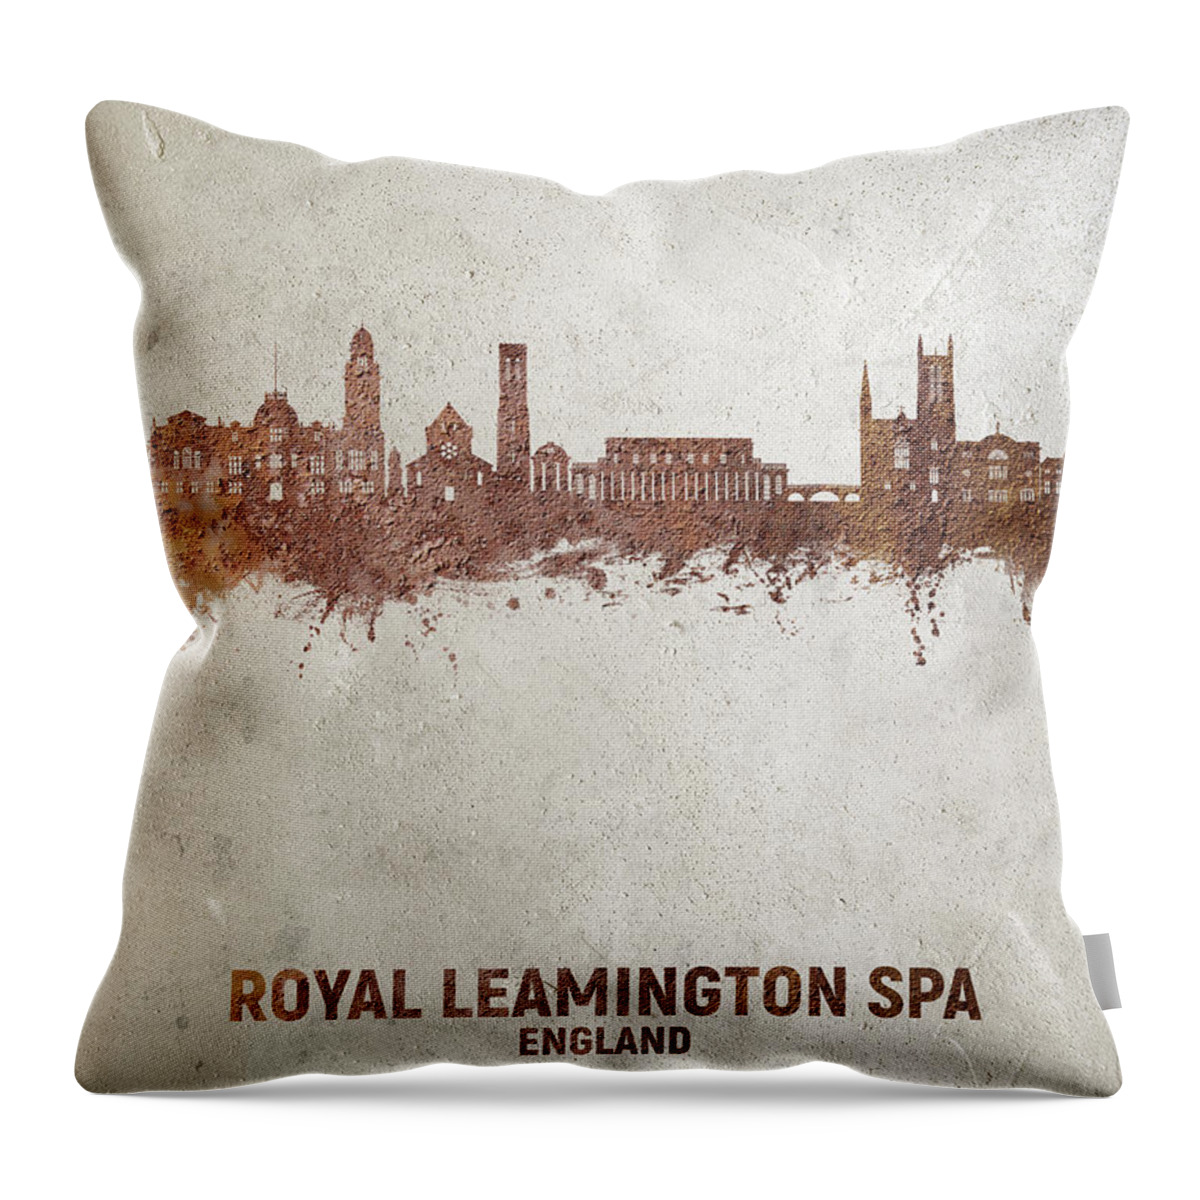 Royal Leamington Spa Throw Pillow featuring the digital art Royal Leamington Spa England Skyline #95 by Michael Tompsett